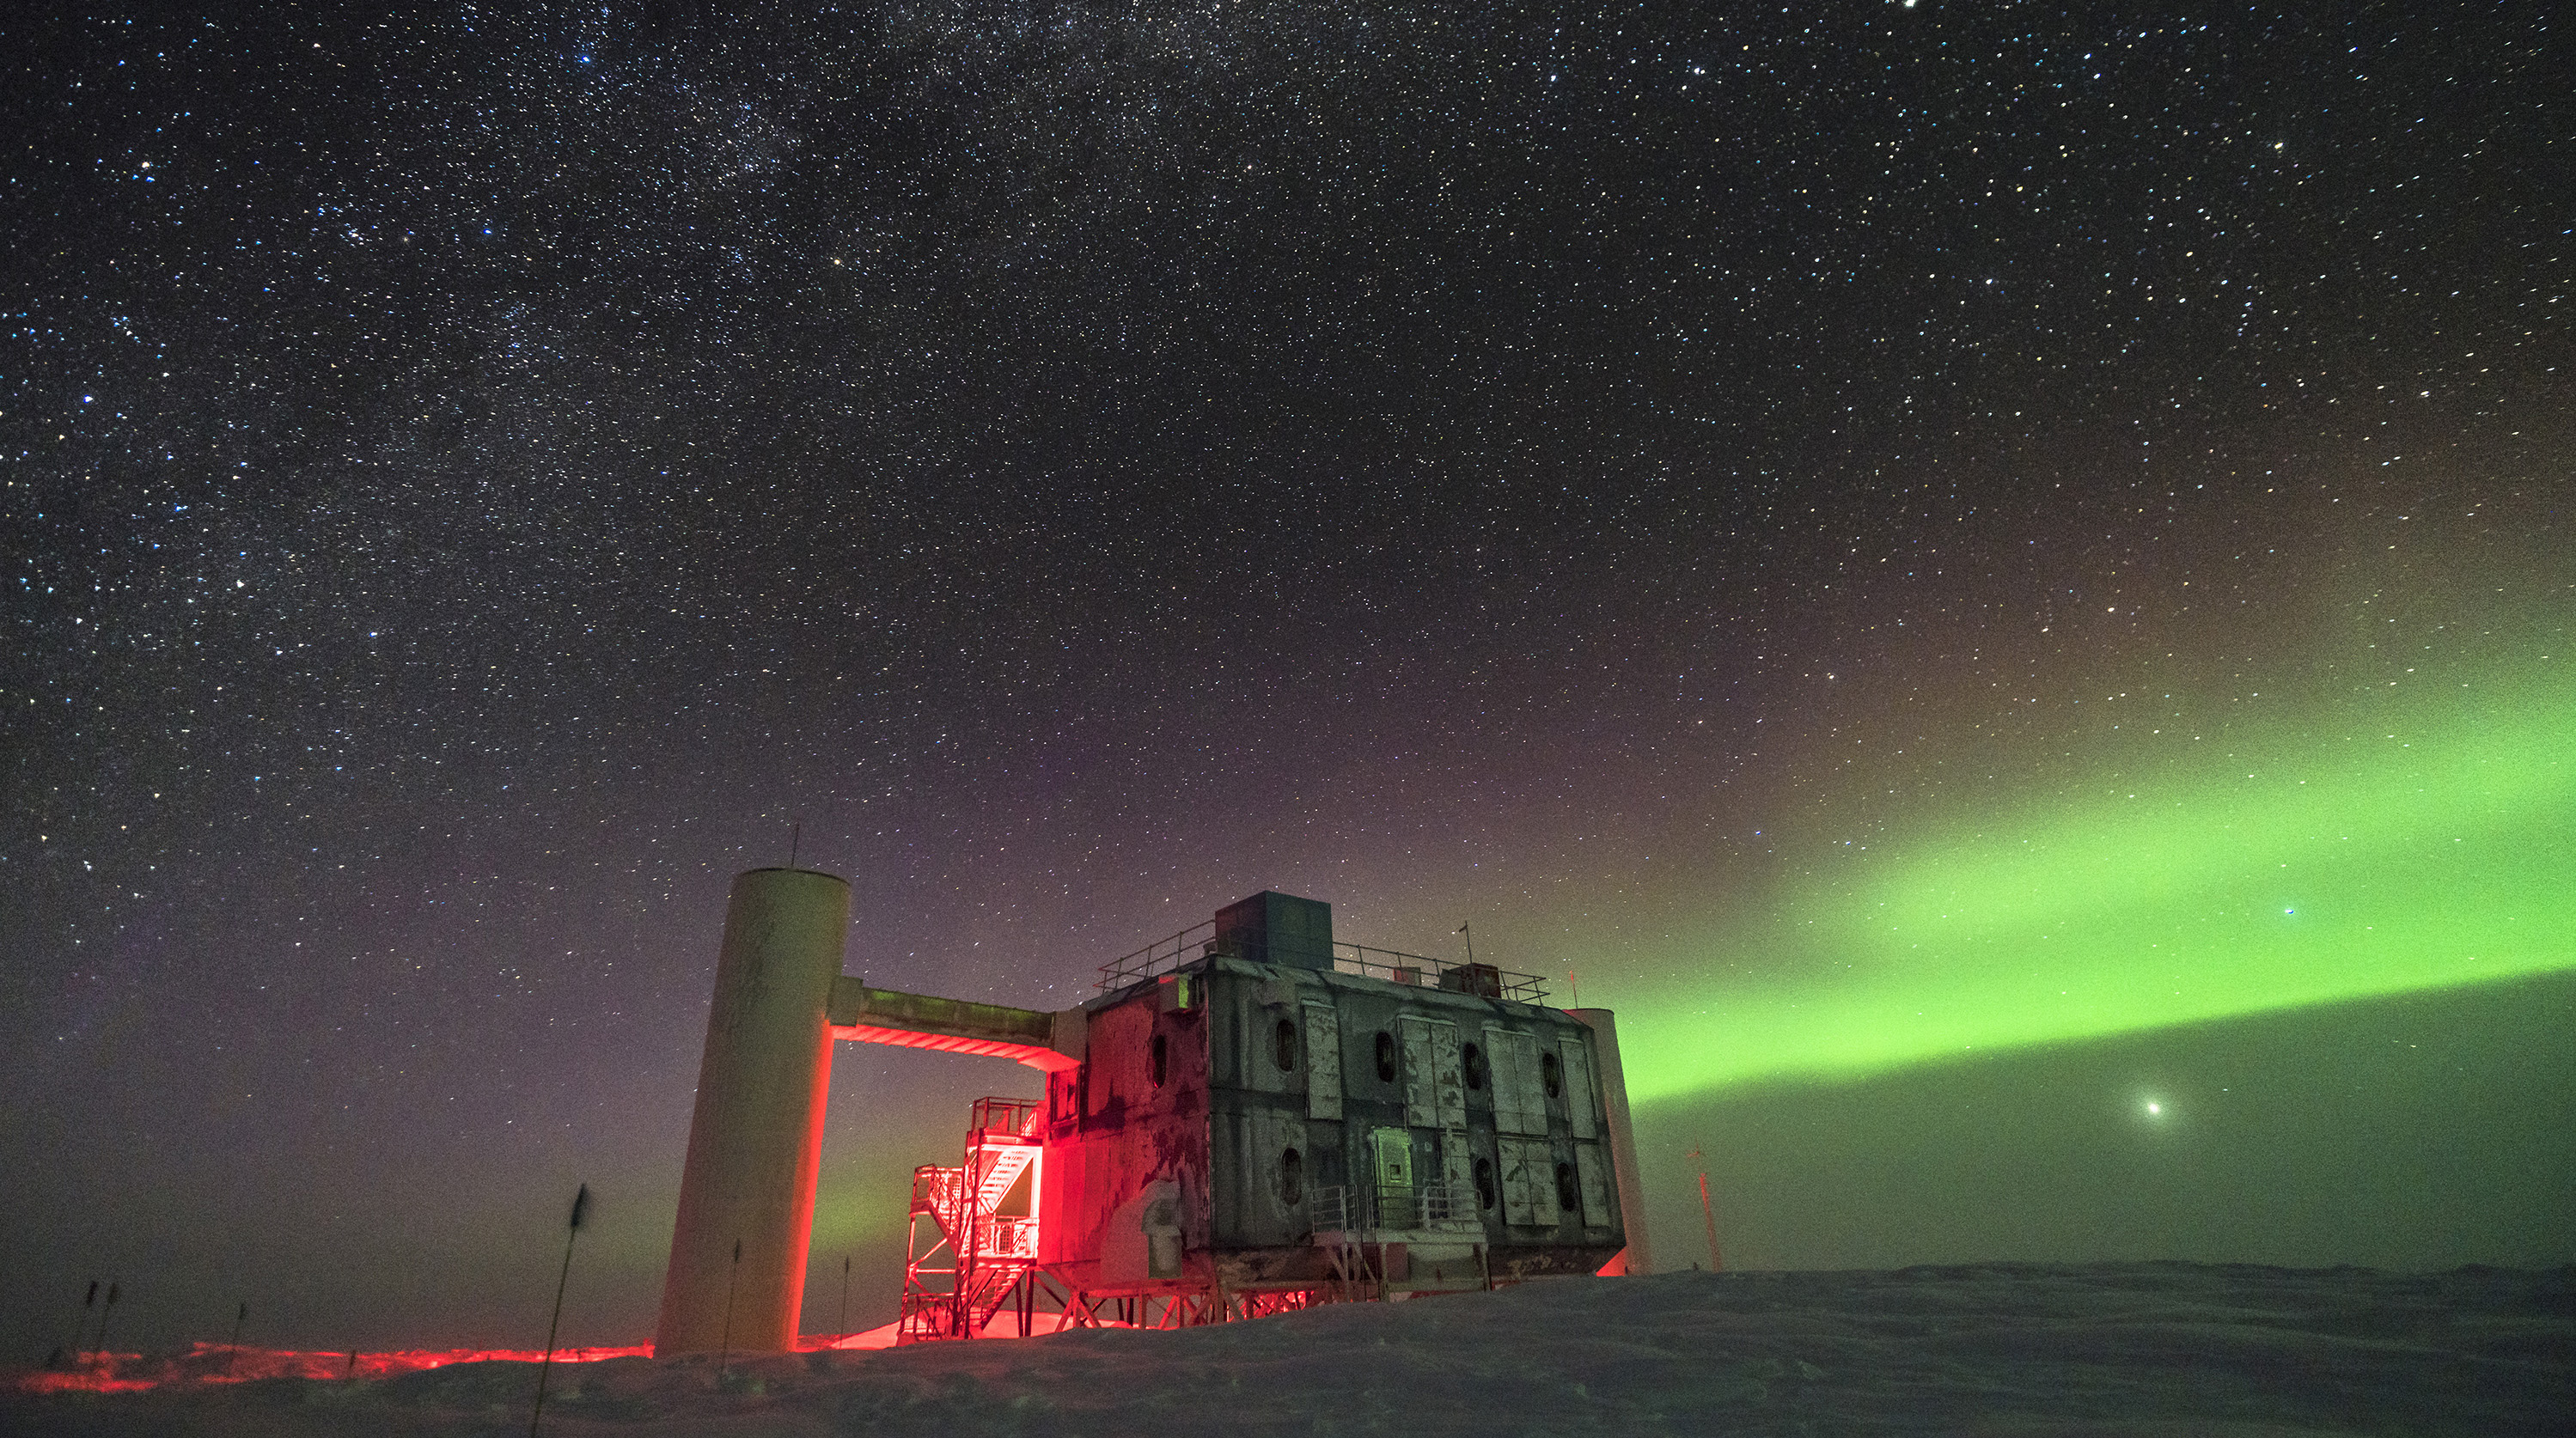 IceCube Observatory at night